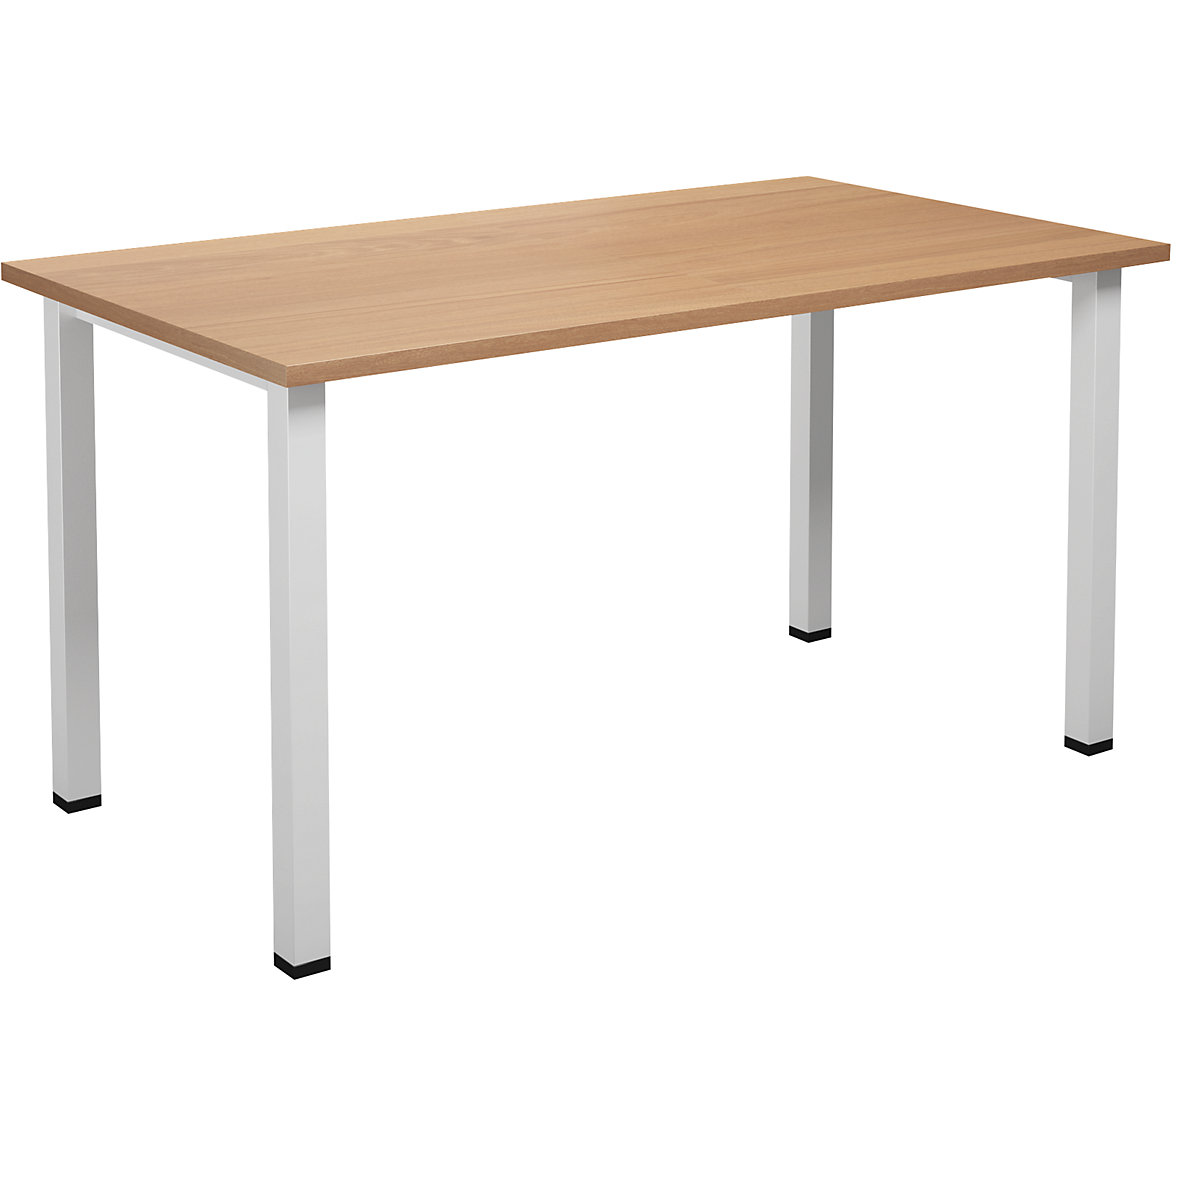 DUO-U multi-purpose desk, straight tabletop, WxD 1400 x 800 mm, beech, beech-16